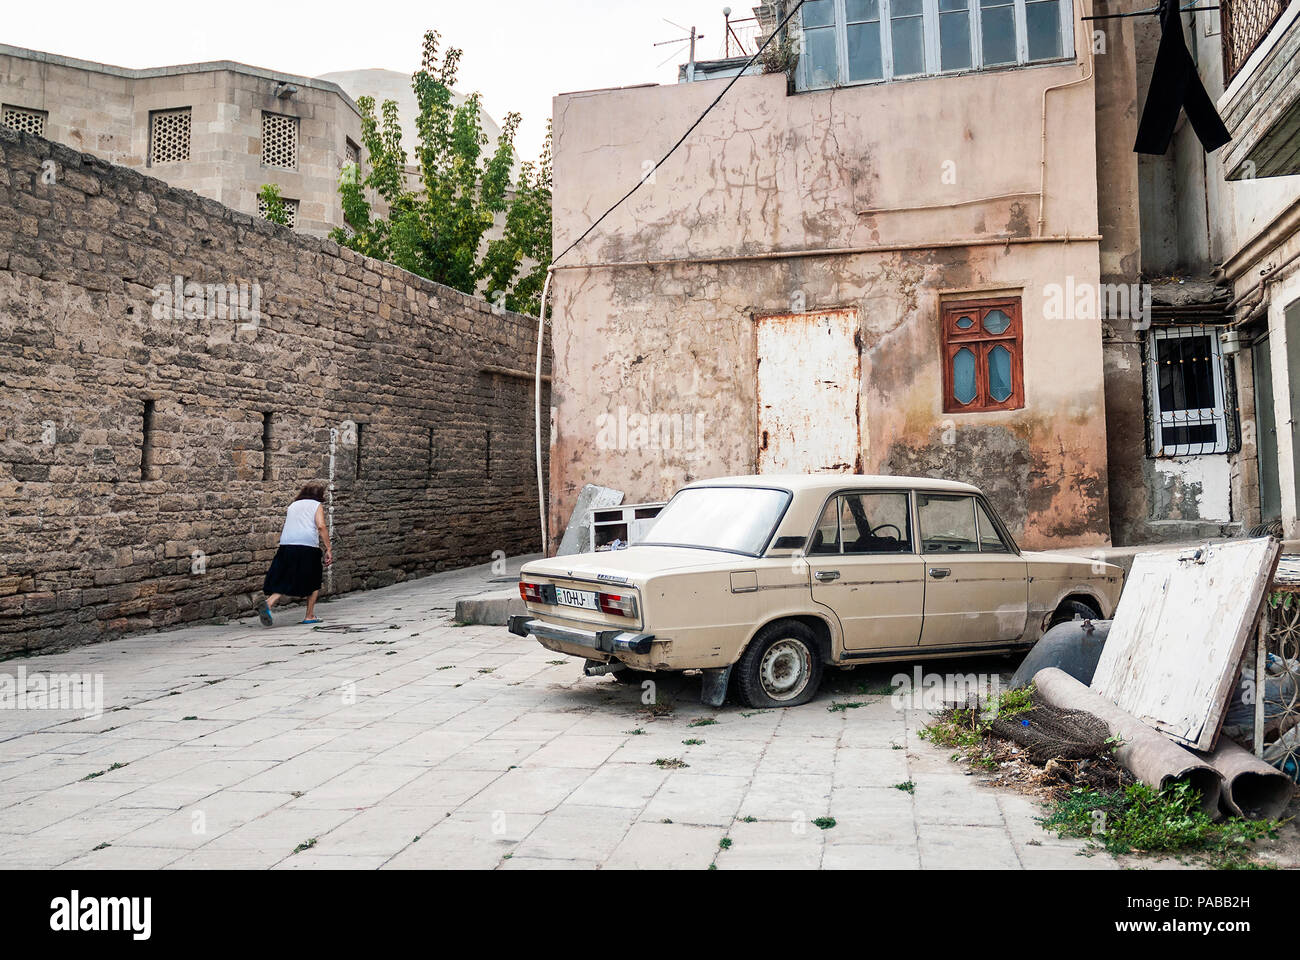 baku city old town street view in azerbaijan with vintage old soviet car Stock Photo